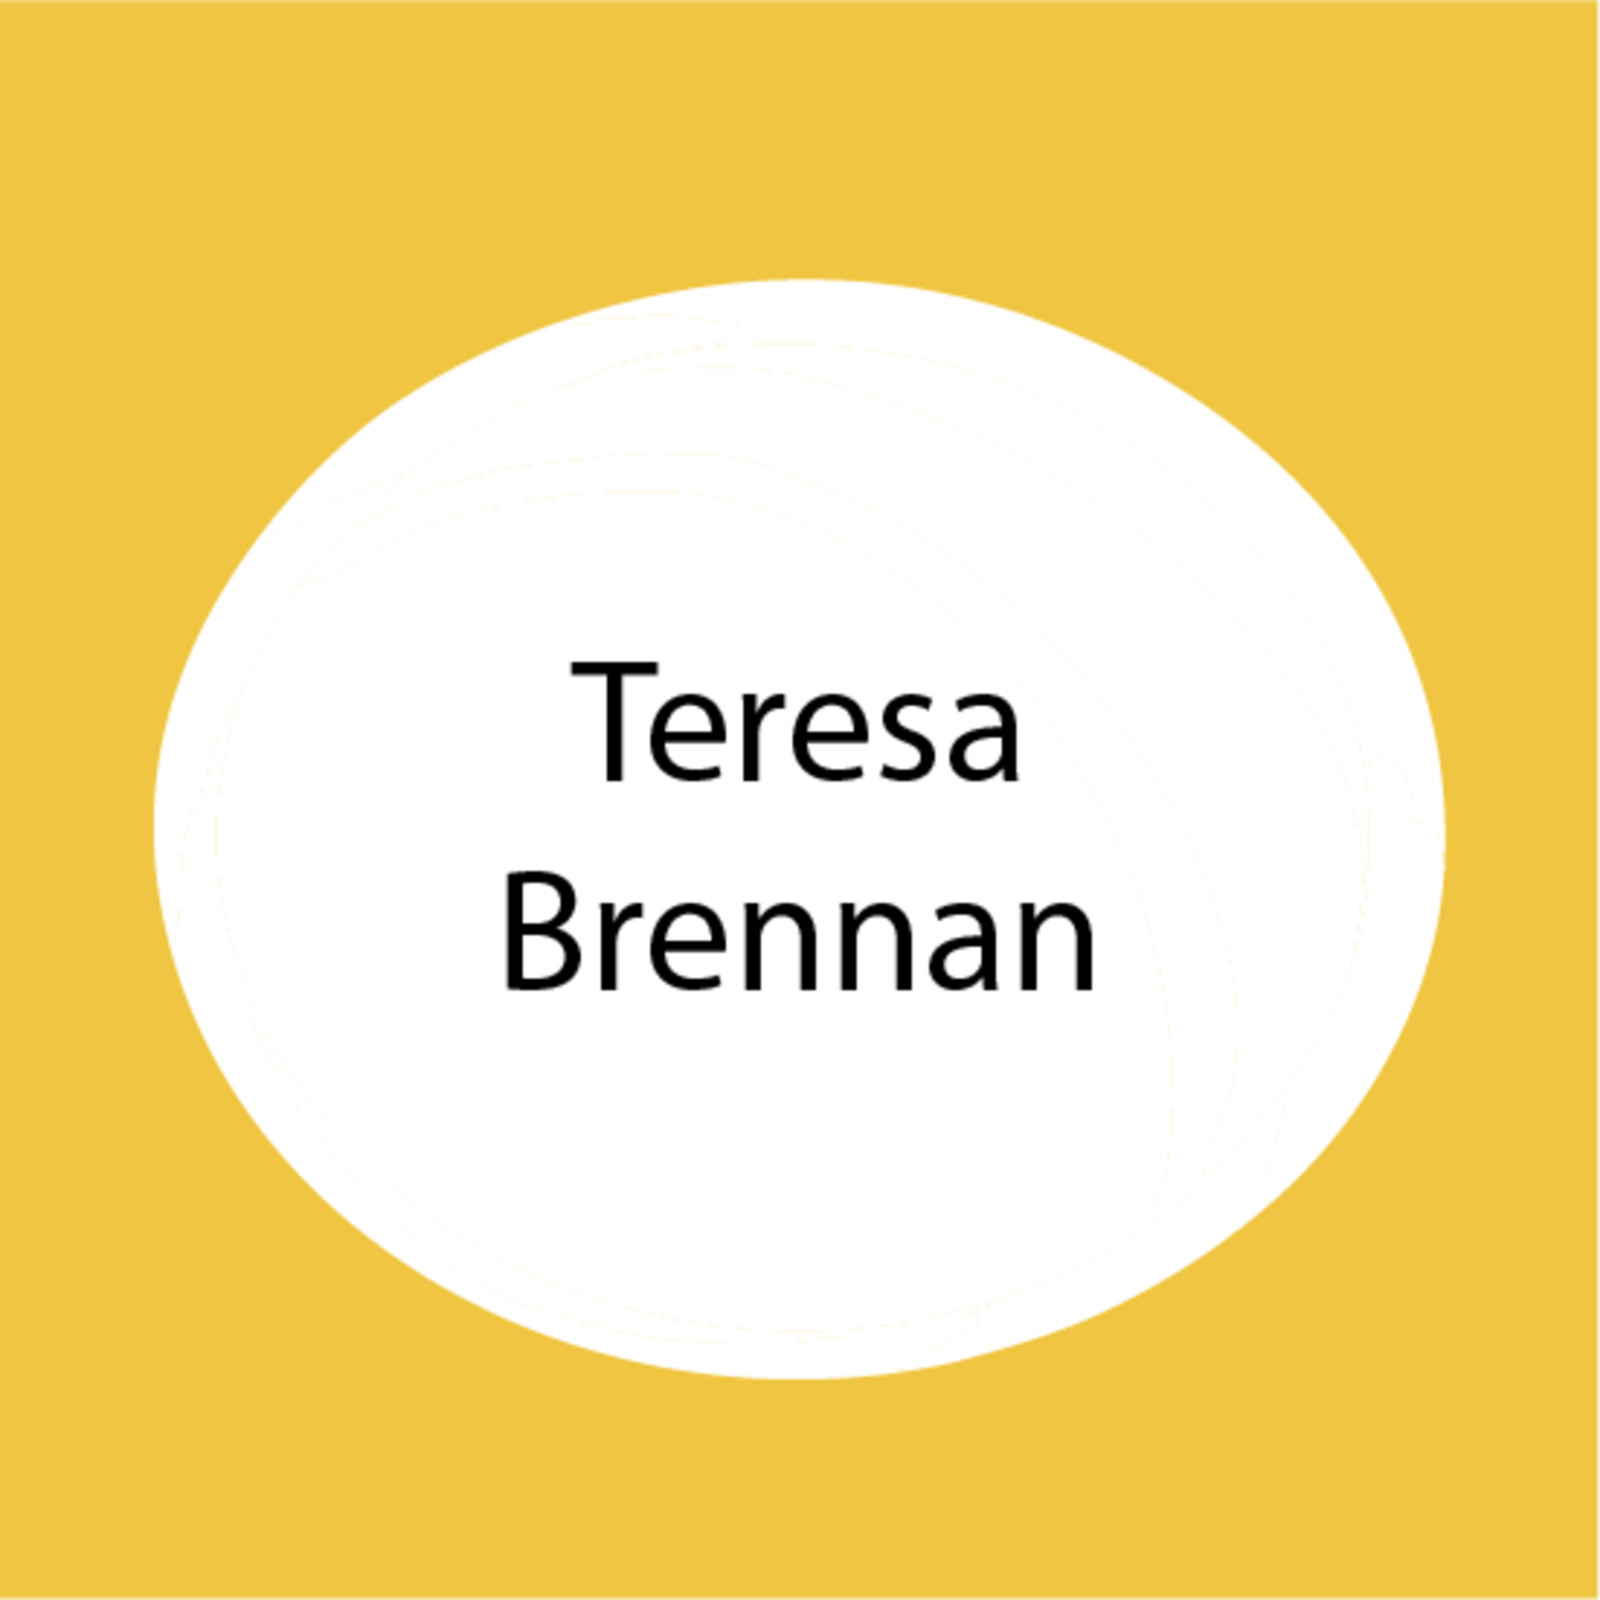 Teresa Brennan